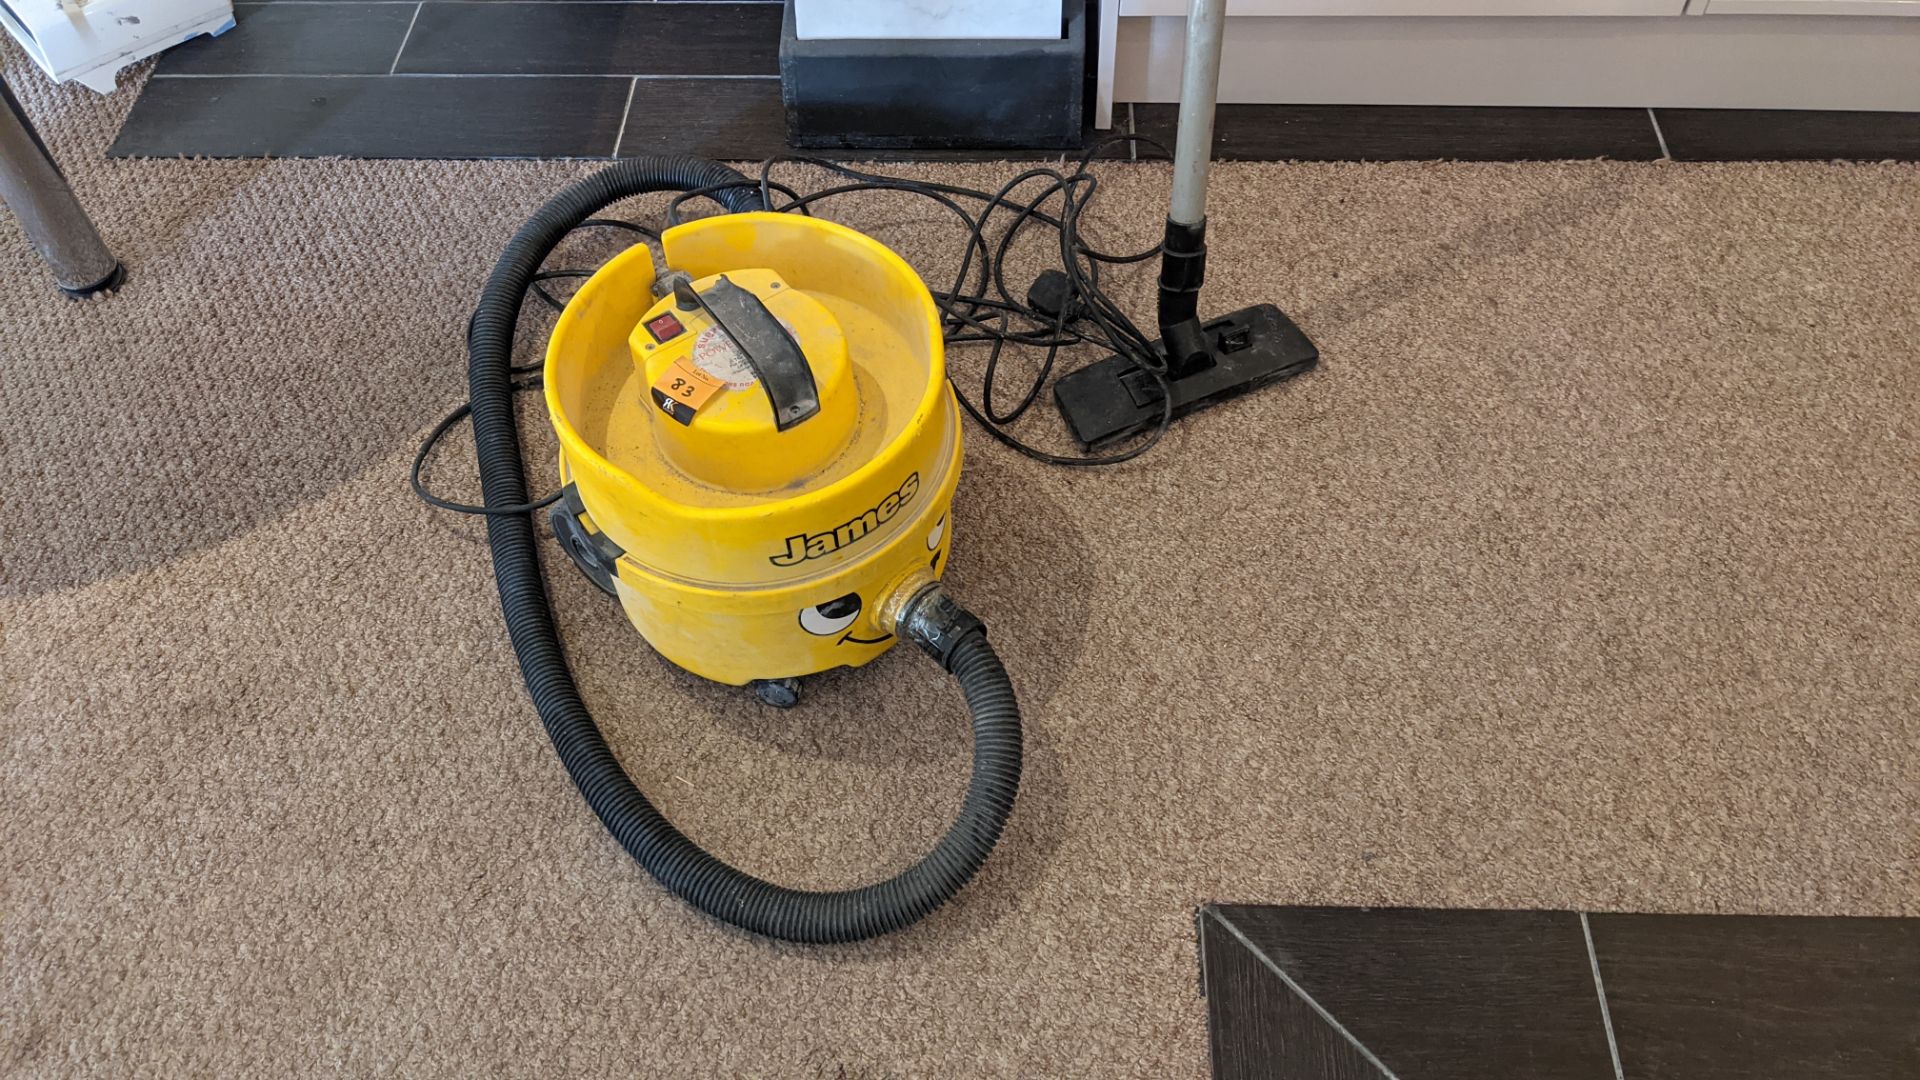 James vacuum cleaner, Numatic model JVP-180-1